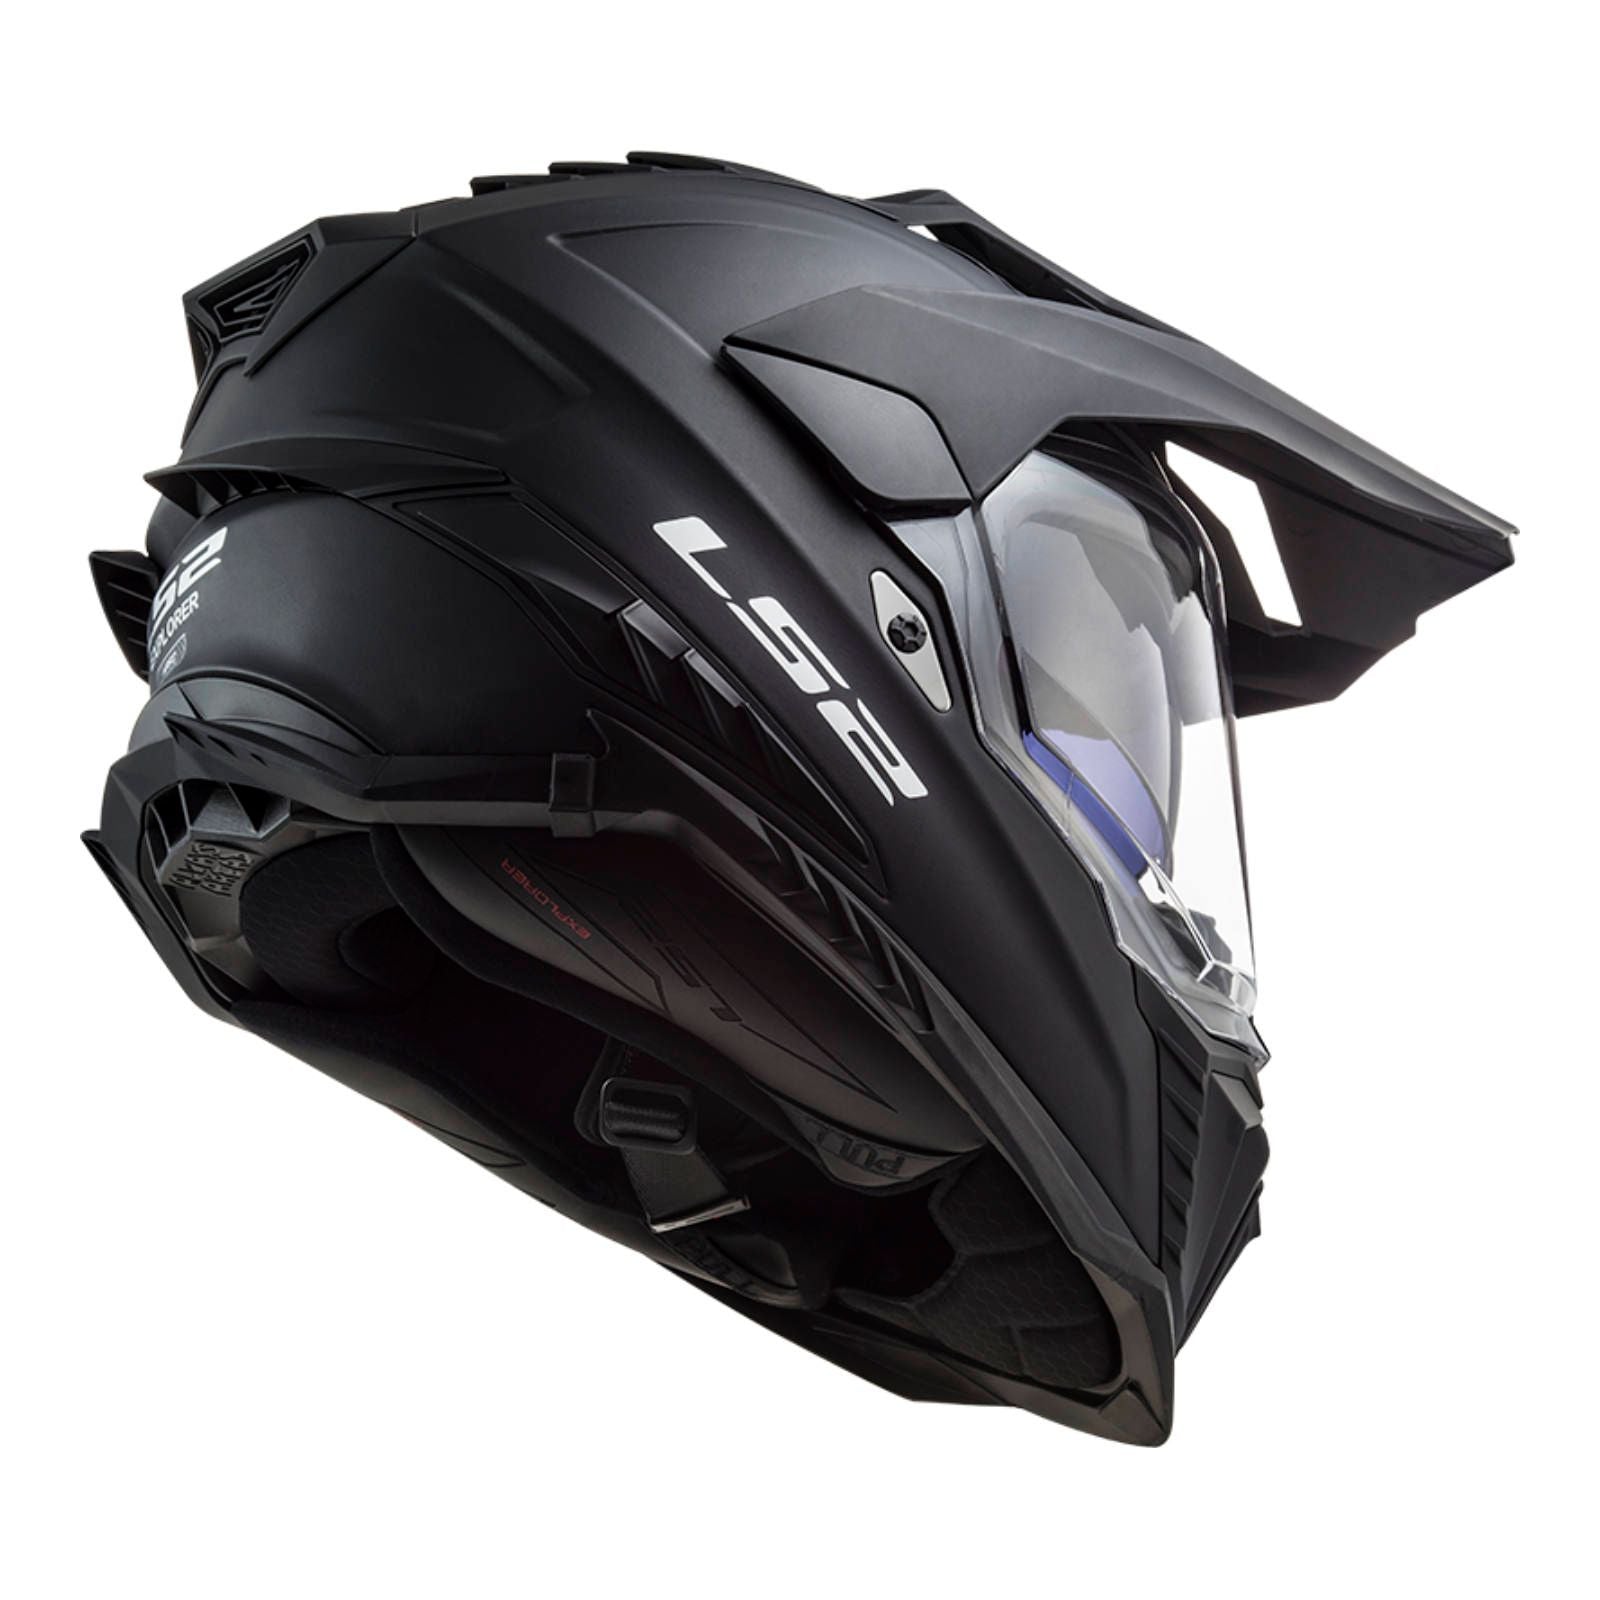 New LS2 Explorer Helmet - Matte Black (S) #LS2MX701SOLMBS